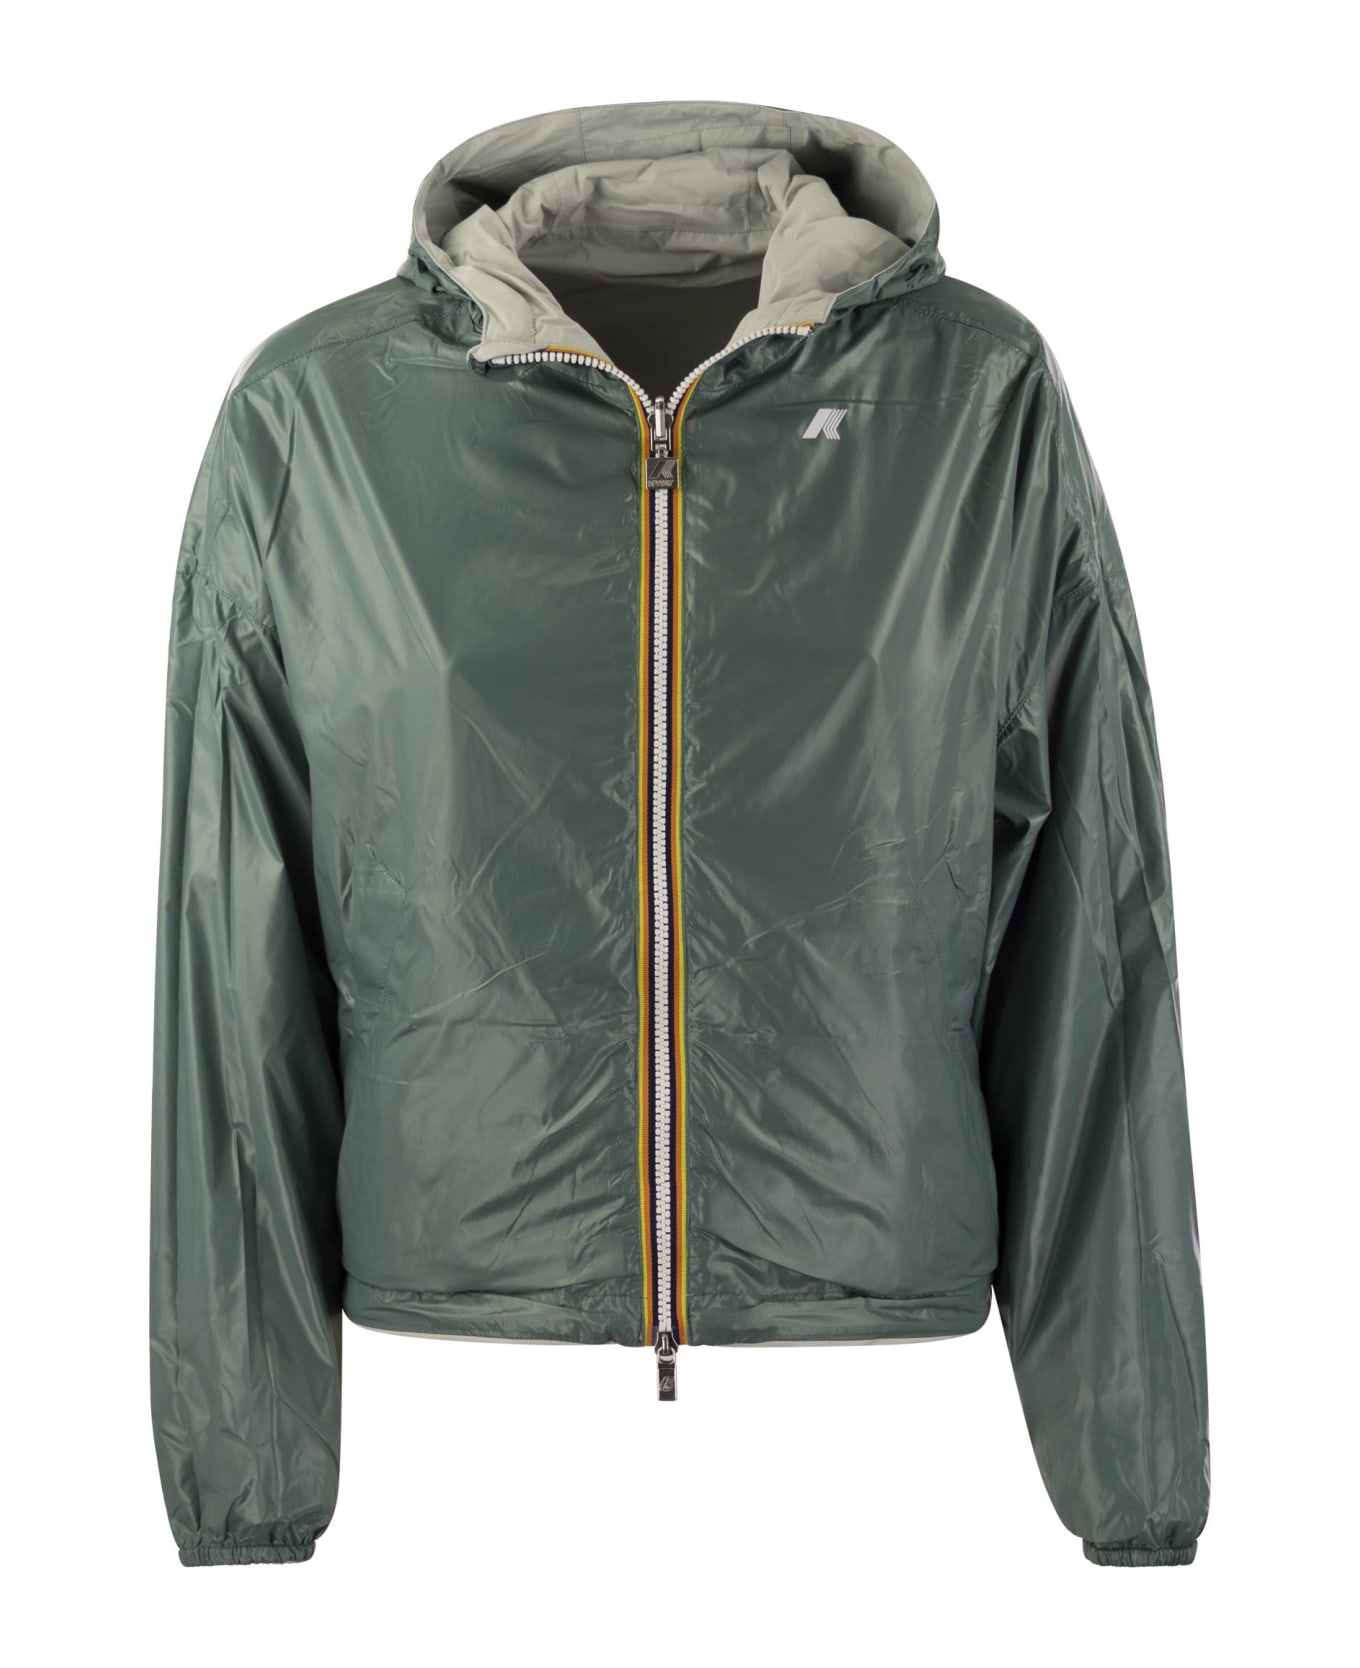 K-Way Laurette Plus - Reversible Hooded Jacket - Light Green/dark Green